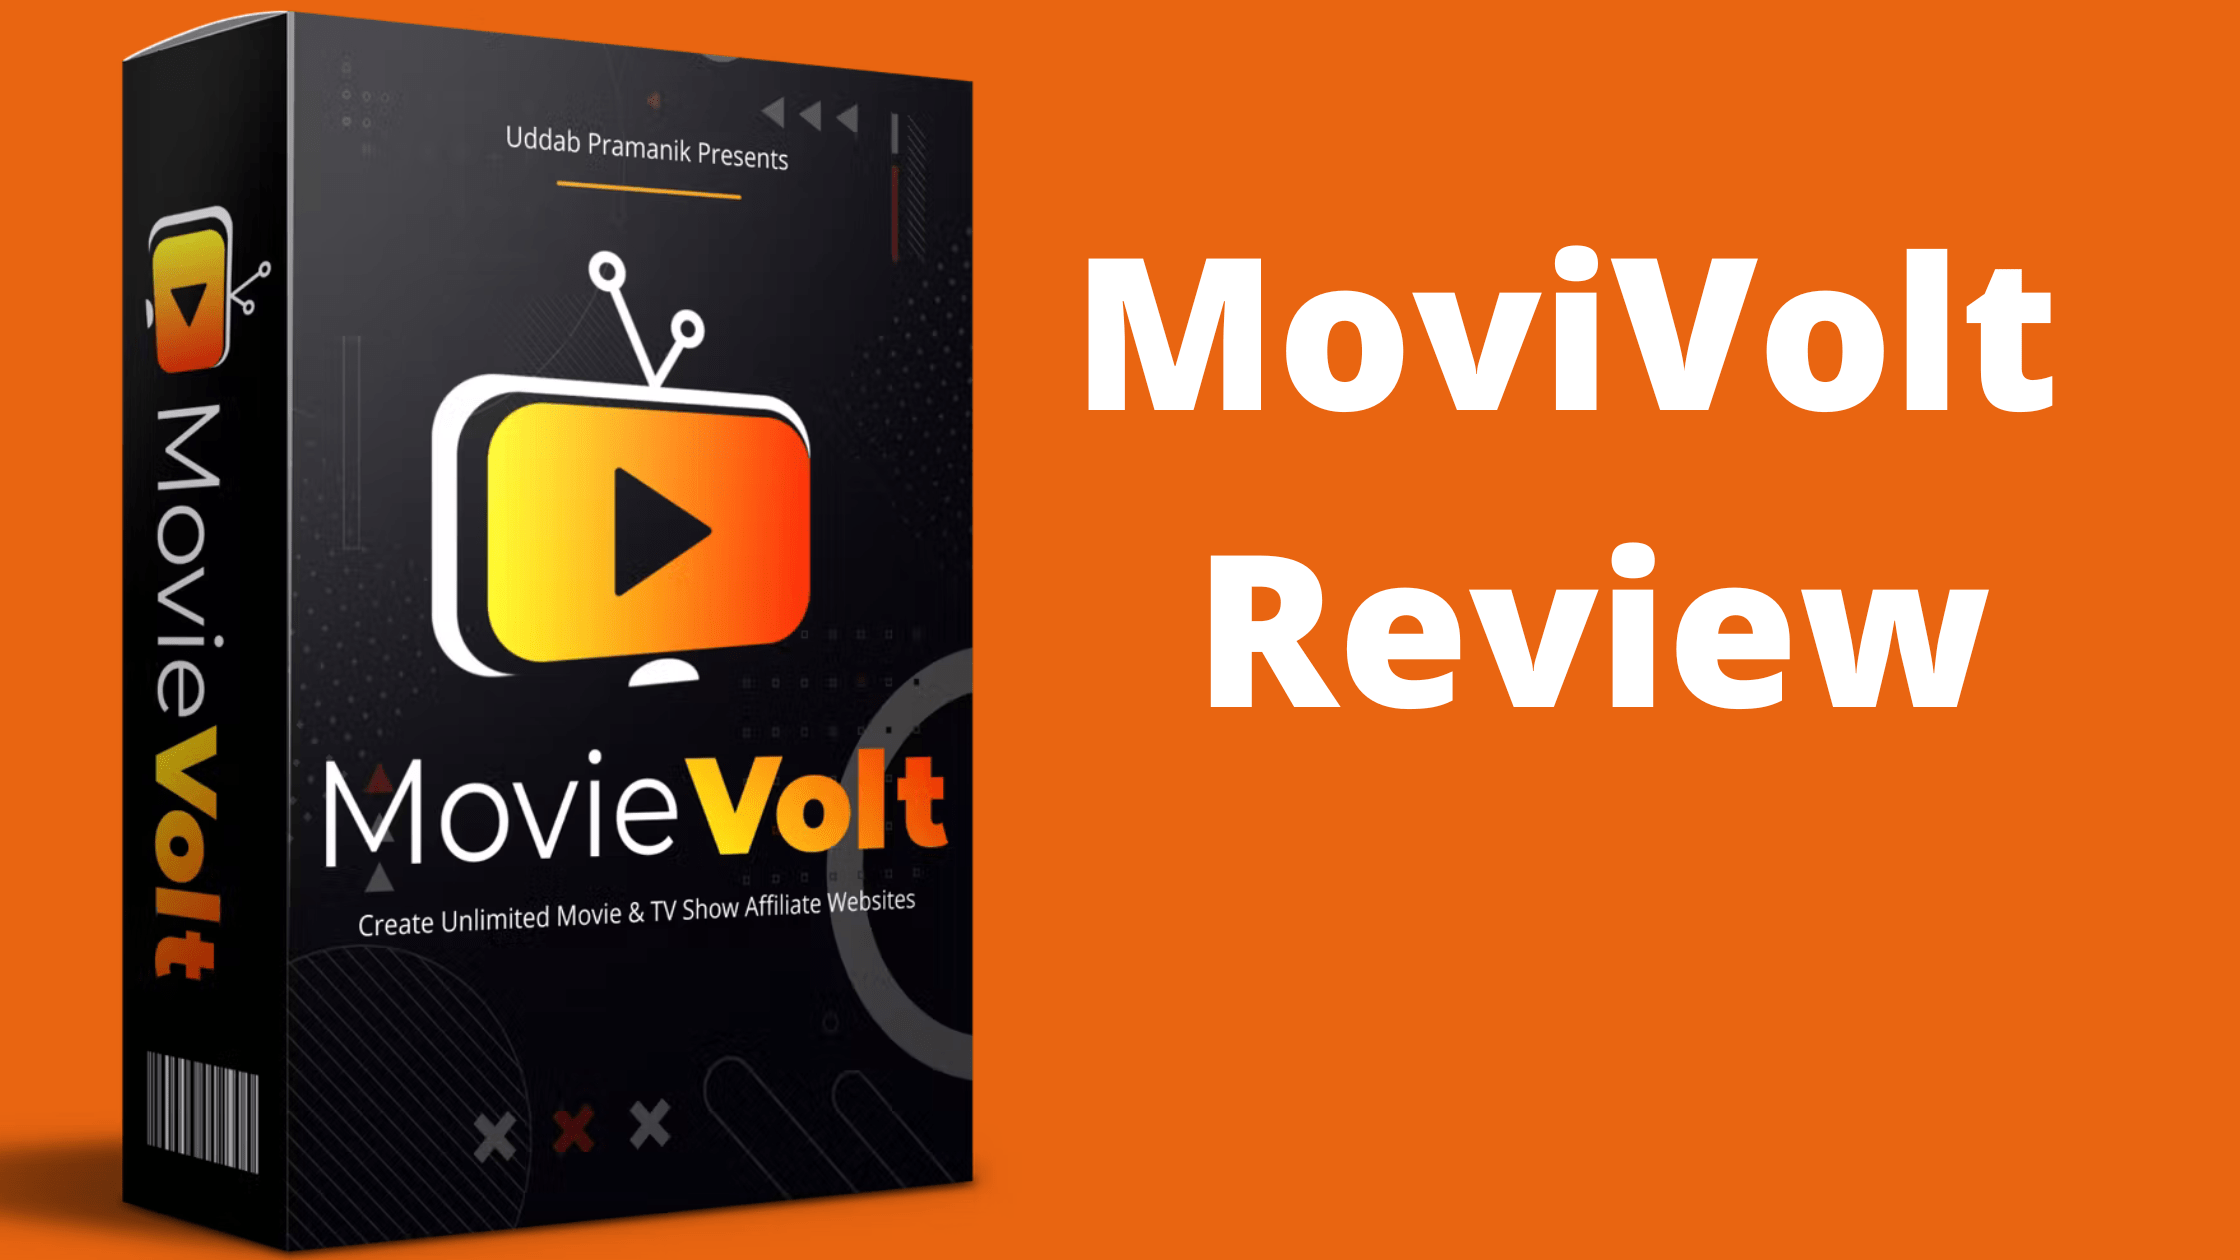 MoviVolt Review